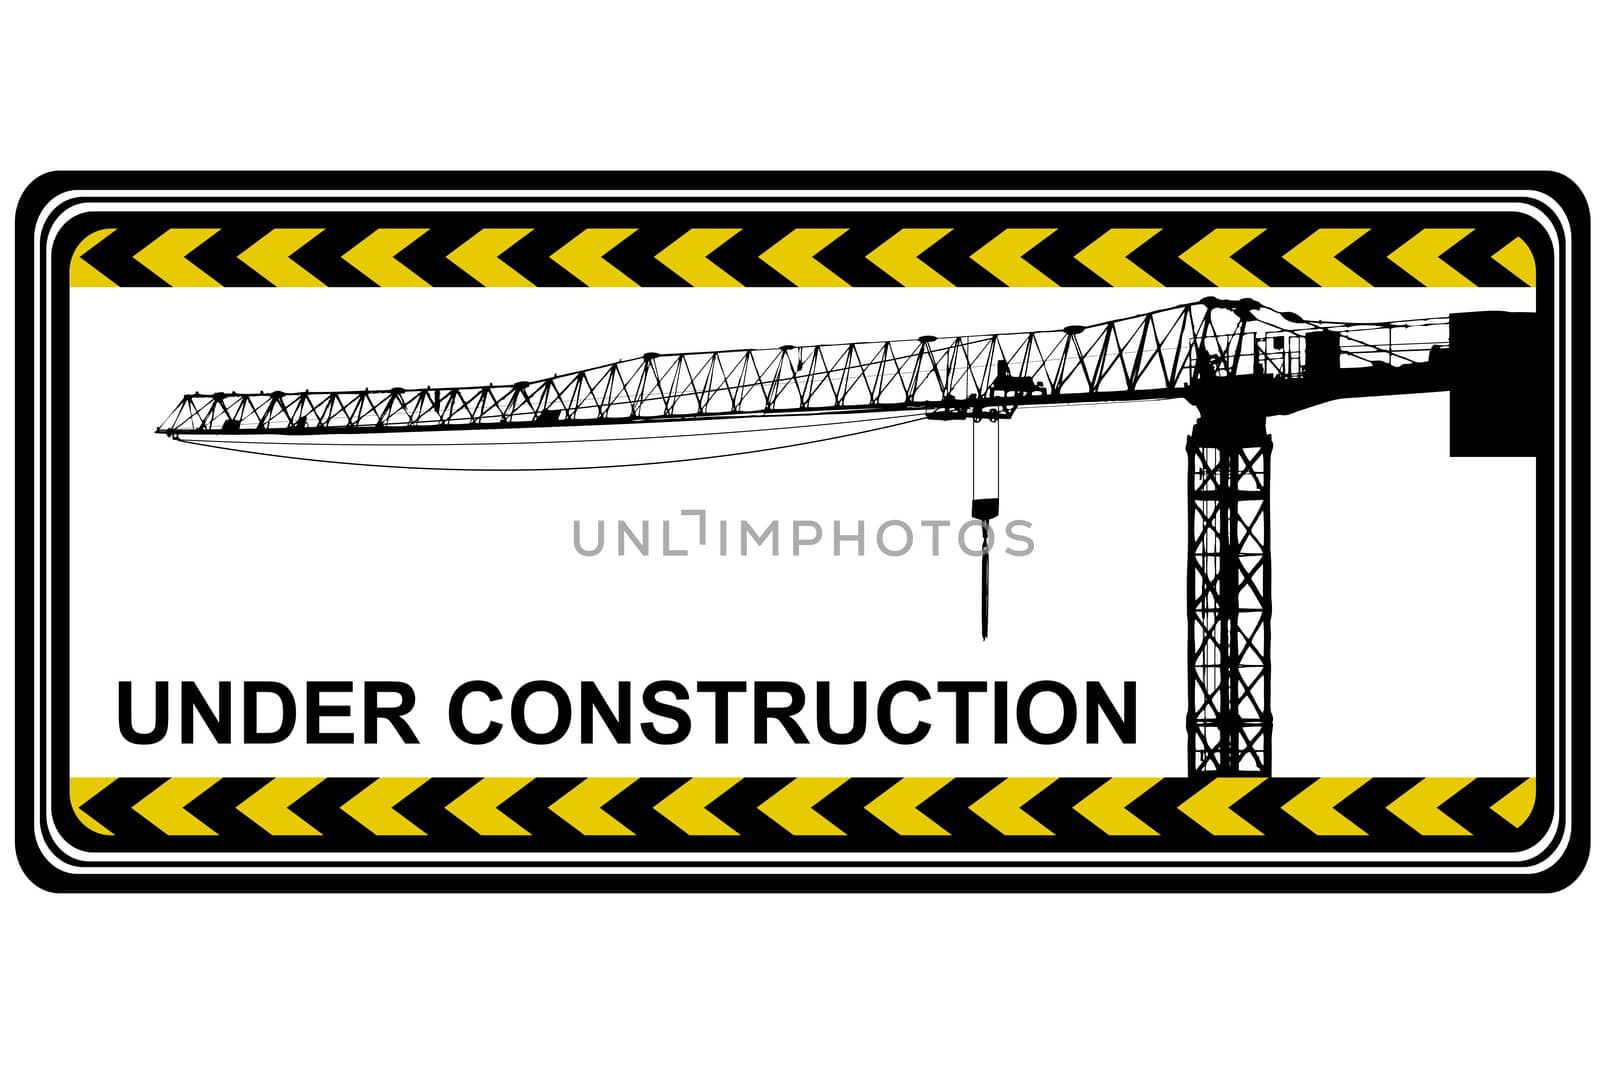 Under construction banner by hibrida13